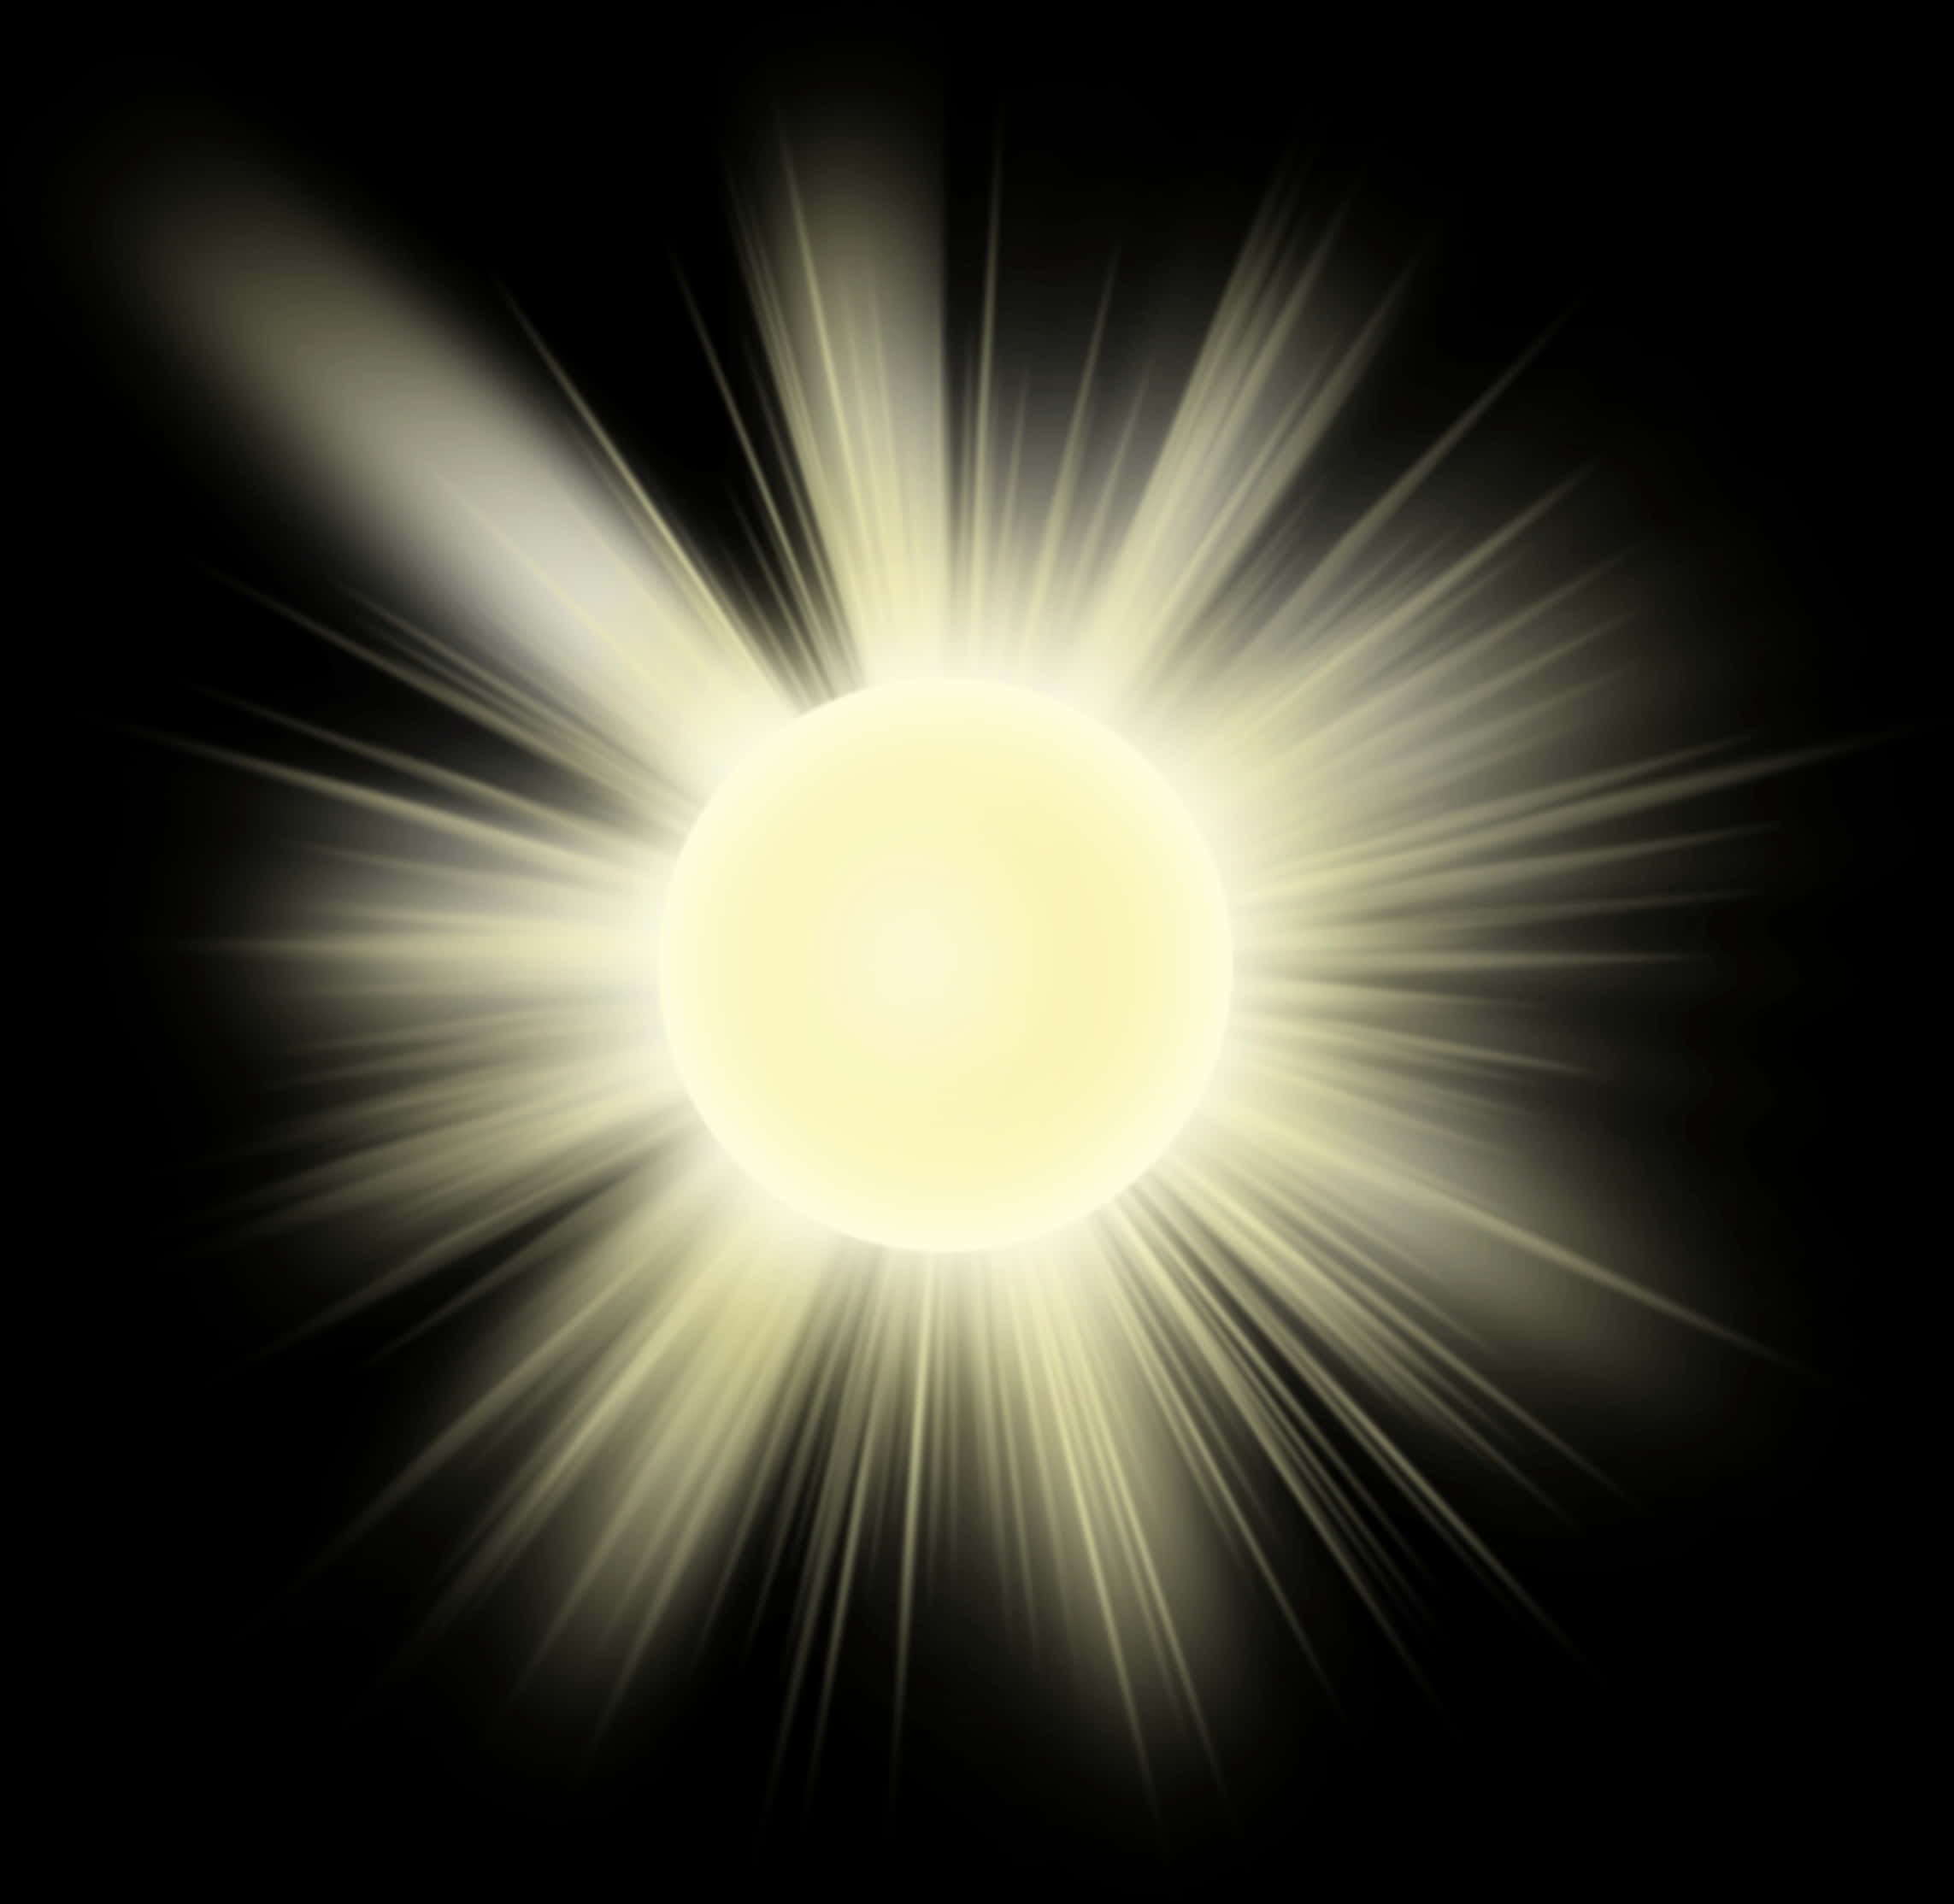 Radiant Sun Illustration PNG